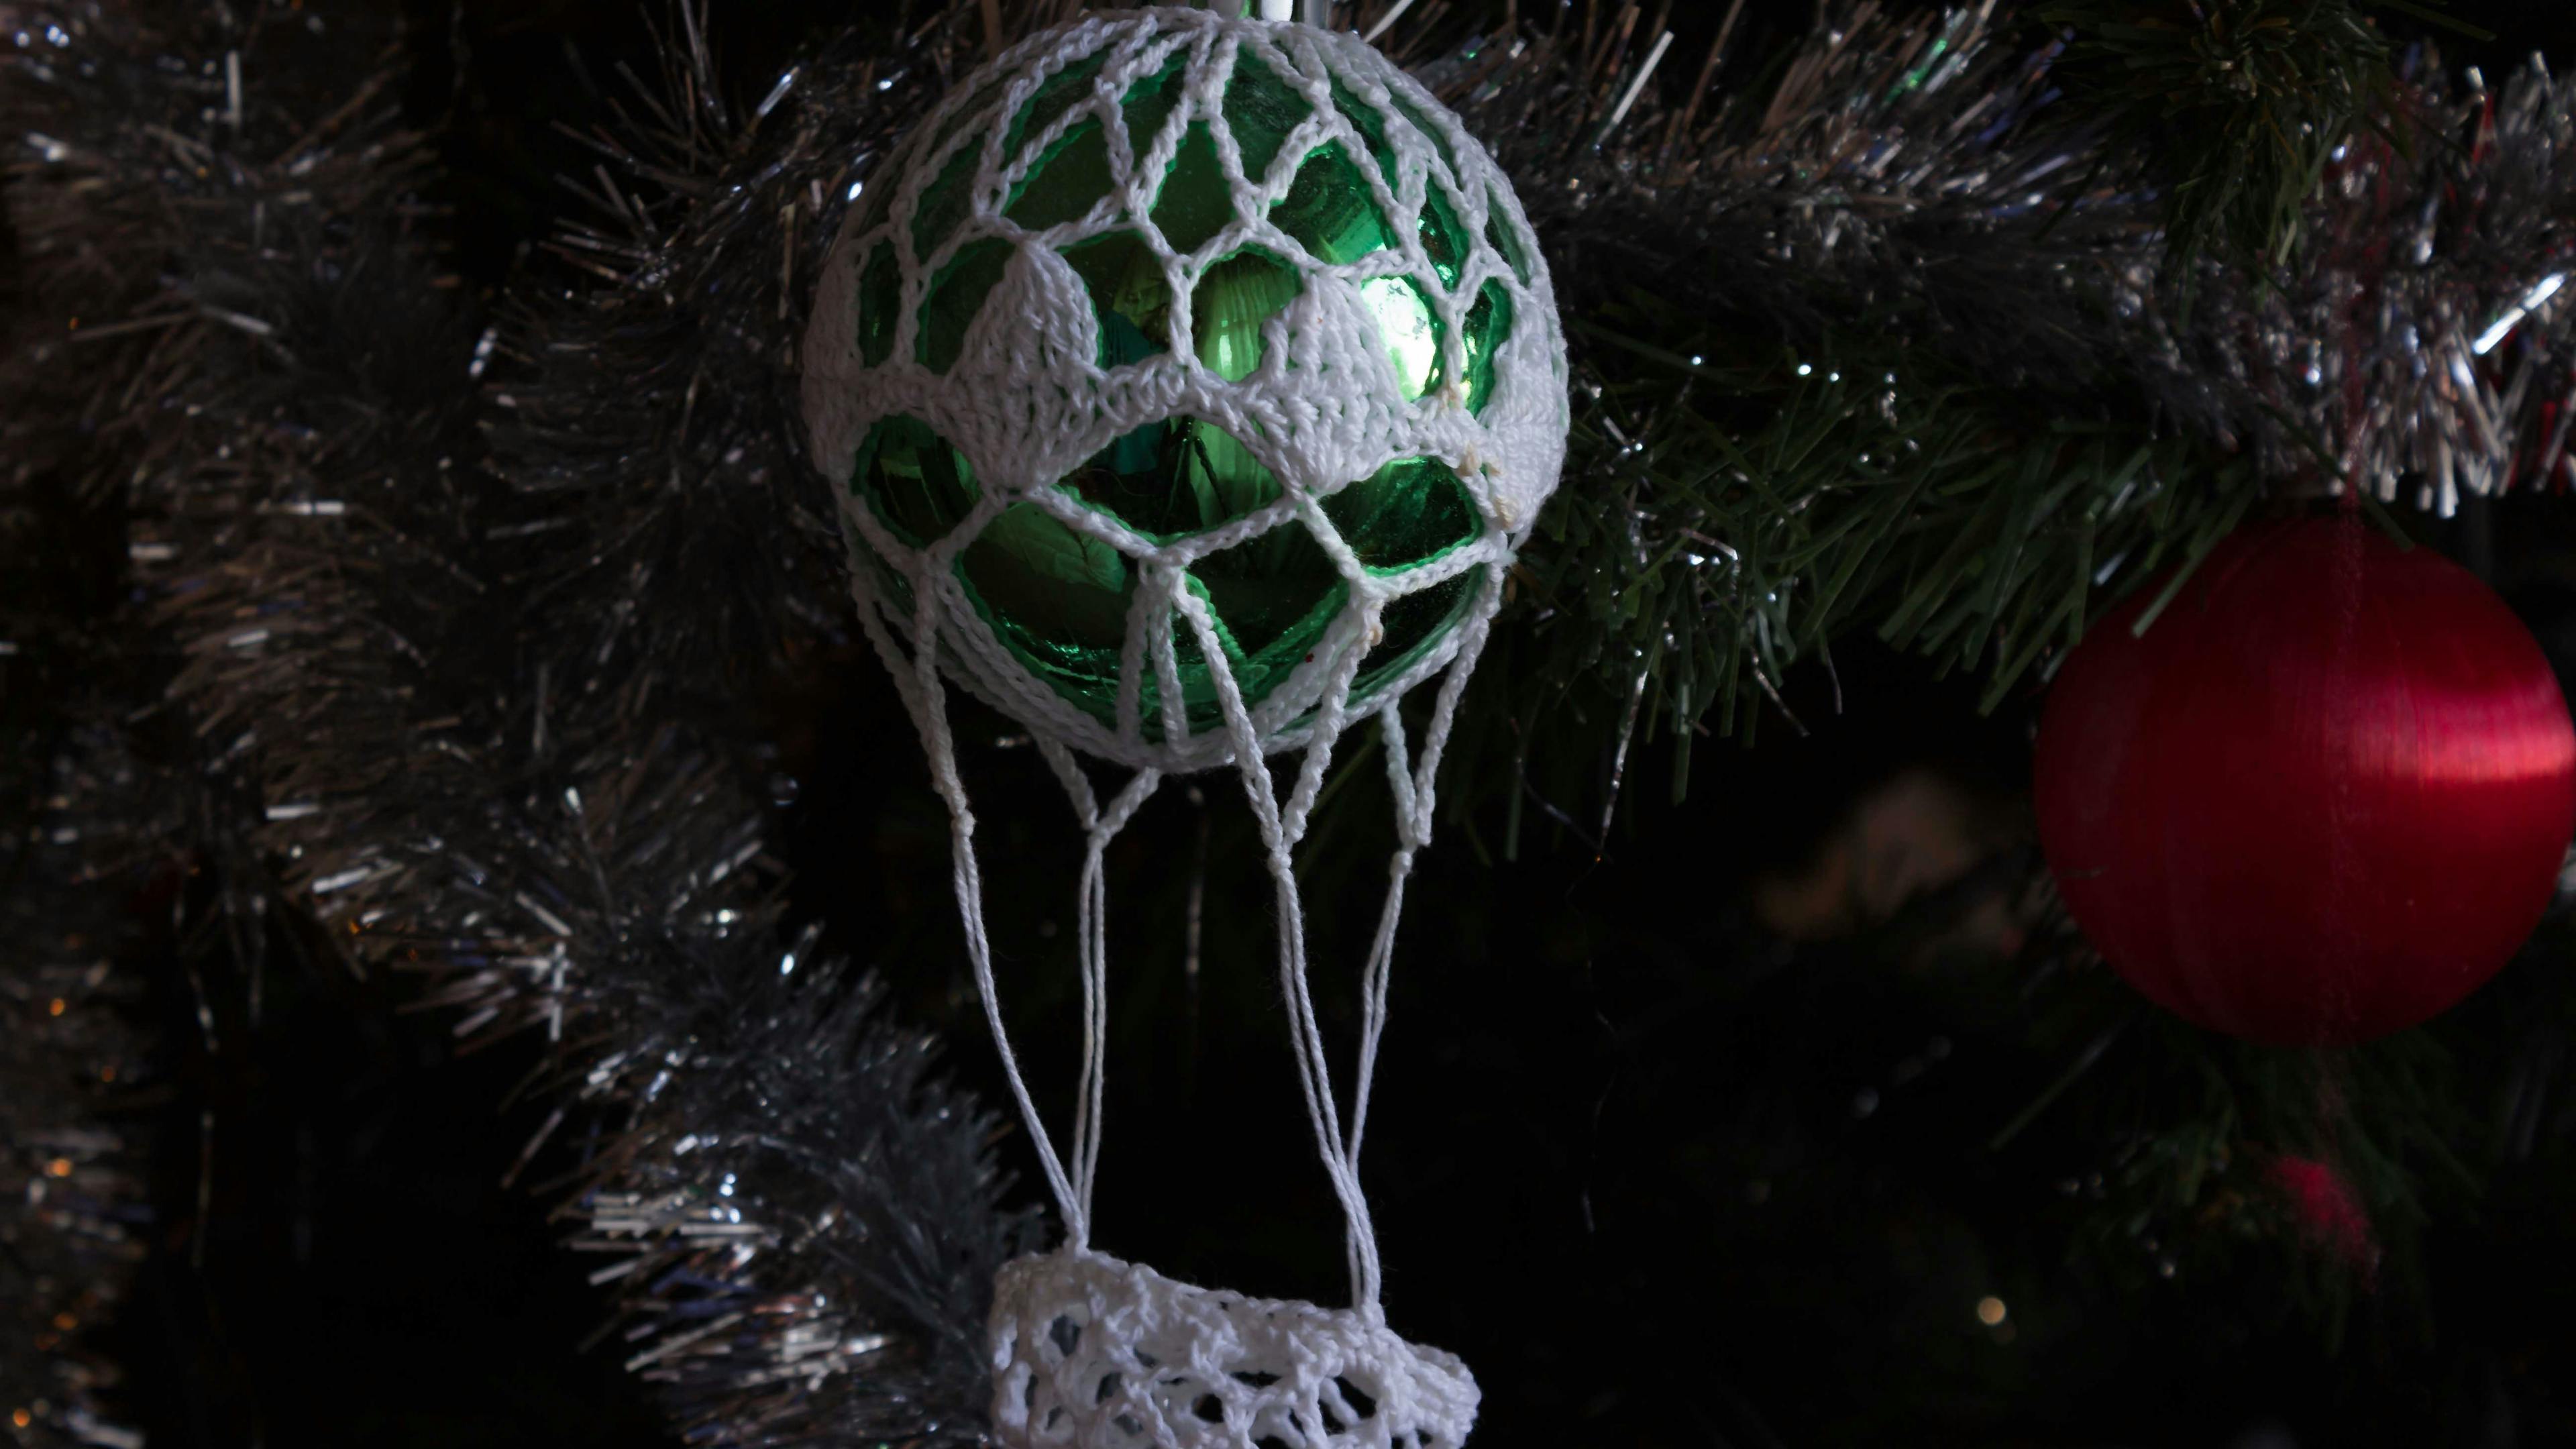 Christmas tree ornament